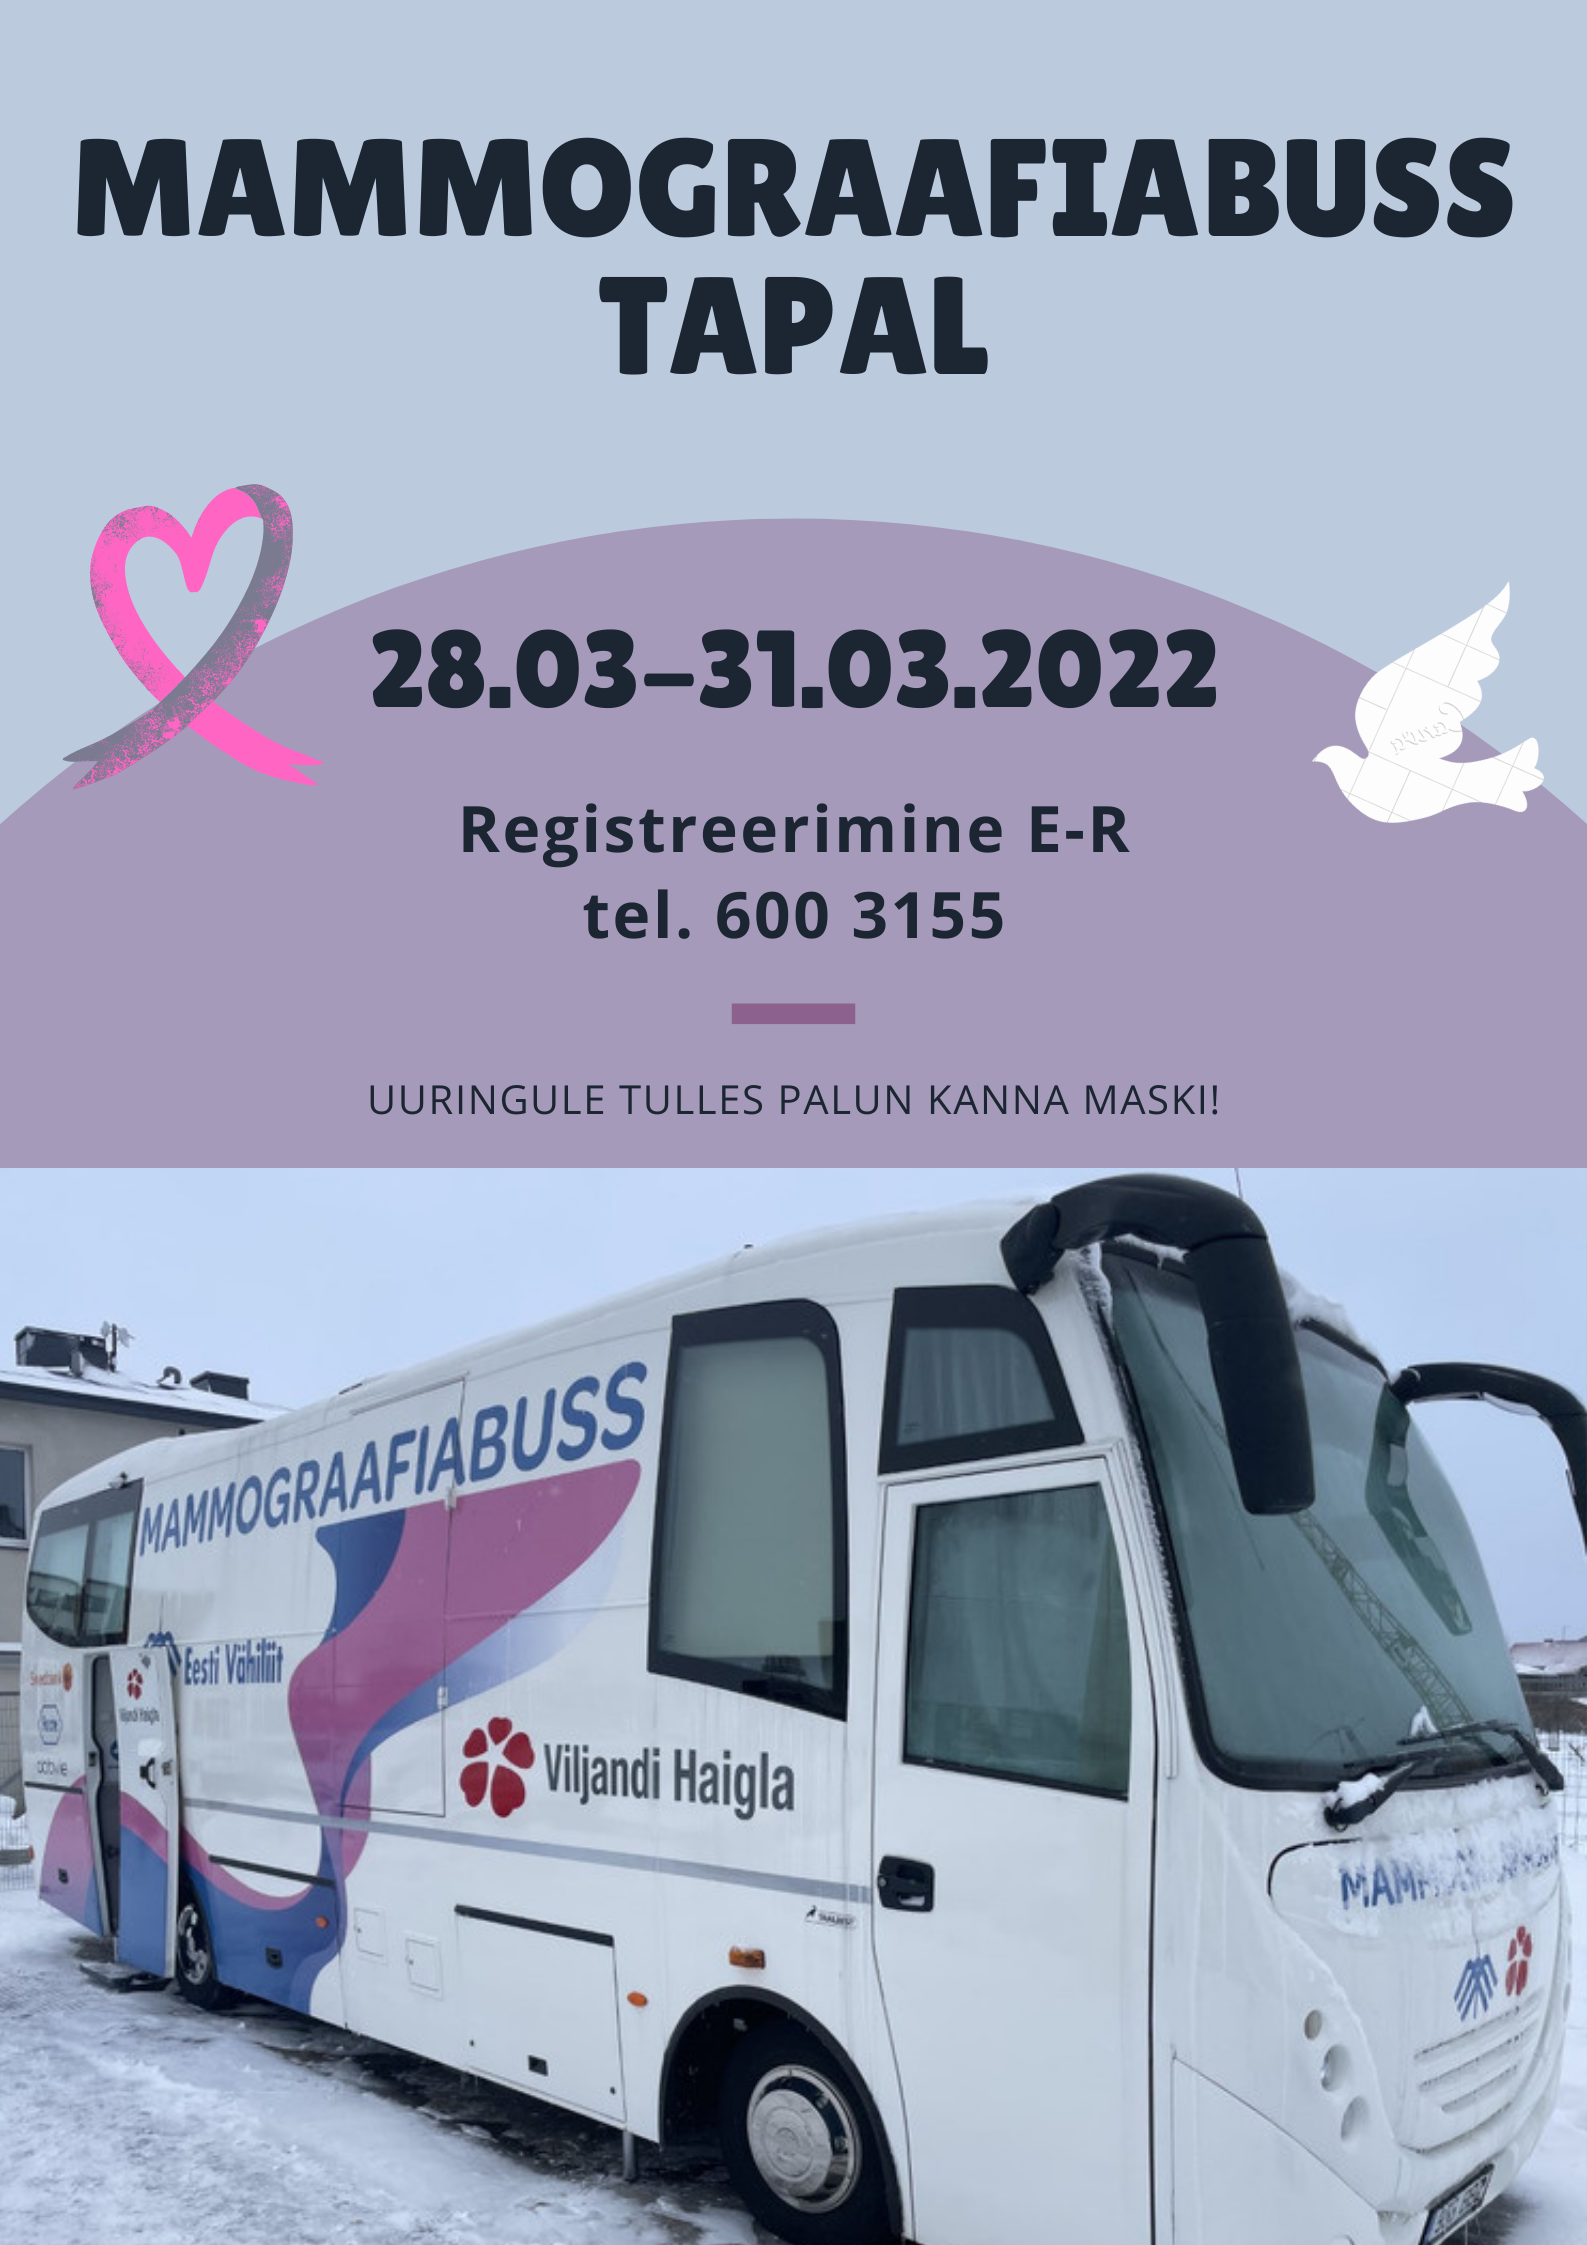 Mammograafiabuss Tapal 28.03-31.03.2022